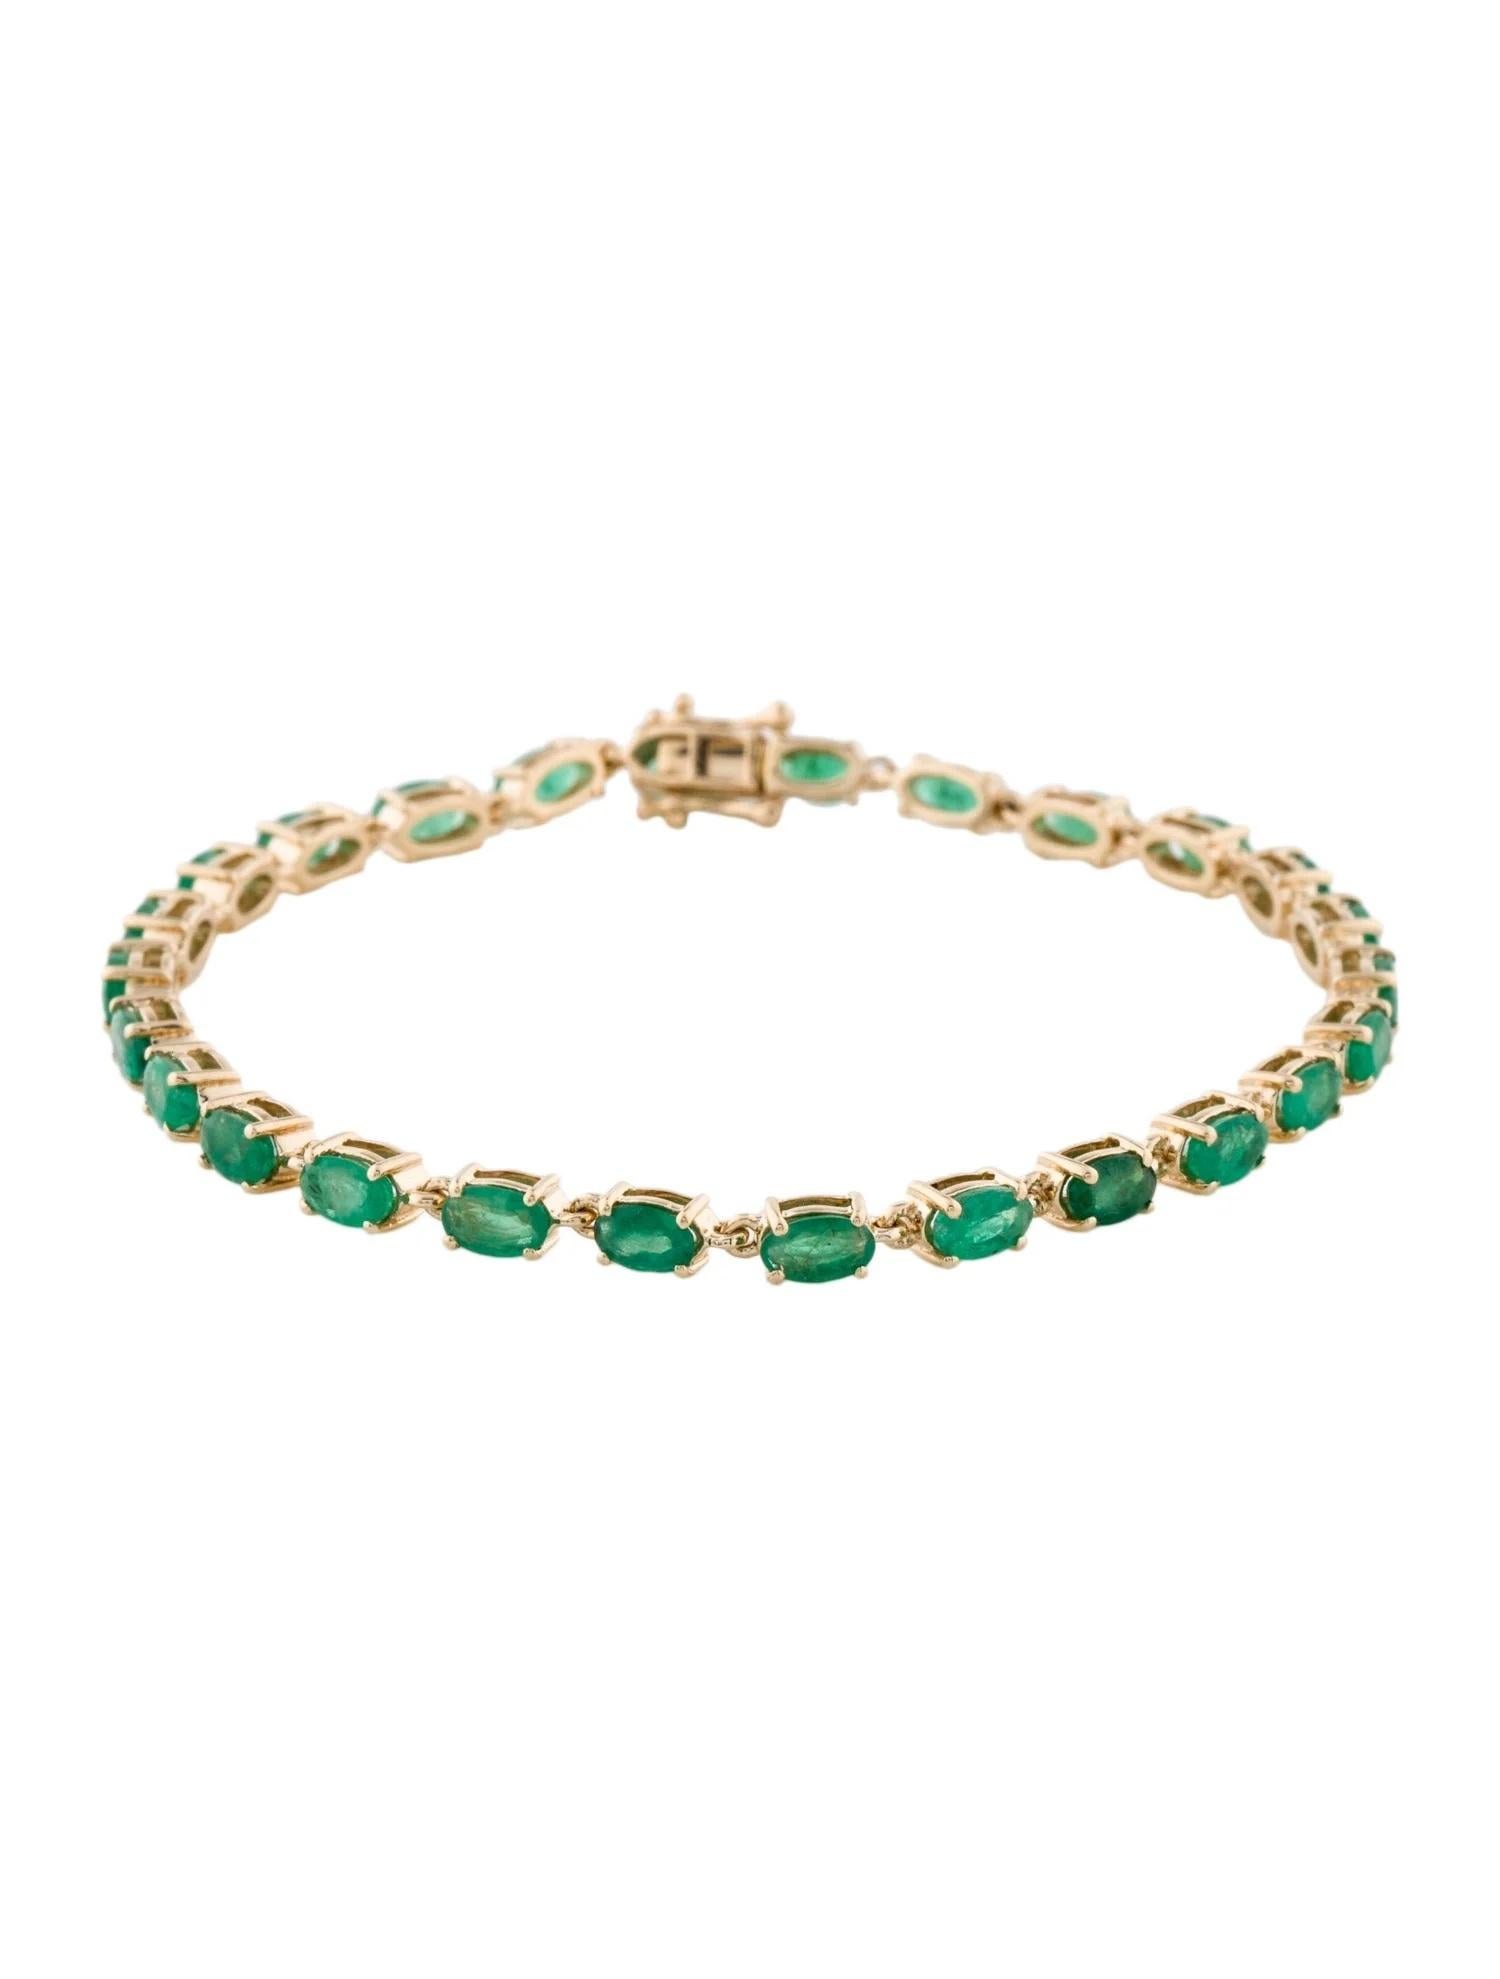 Emerald Cut 14K 5.35ctw Emerald Link Bracelet  Yellow Gold  6.75